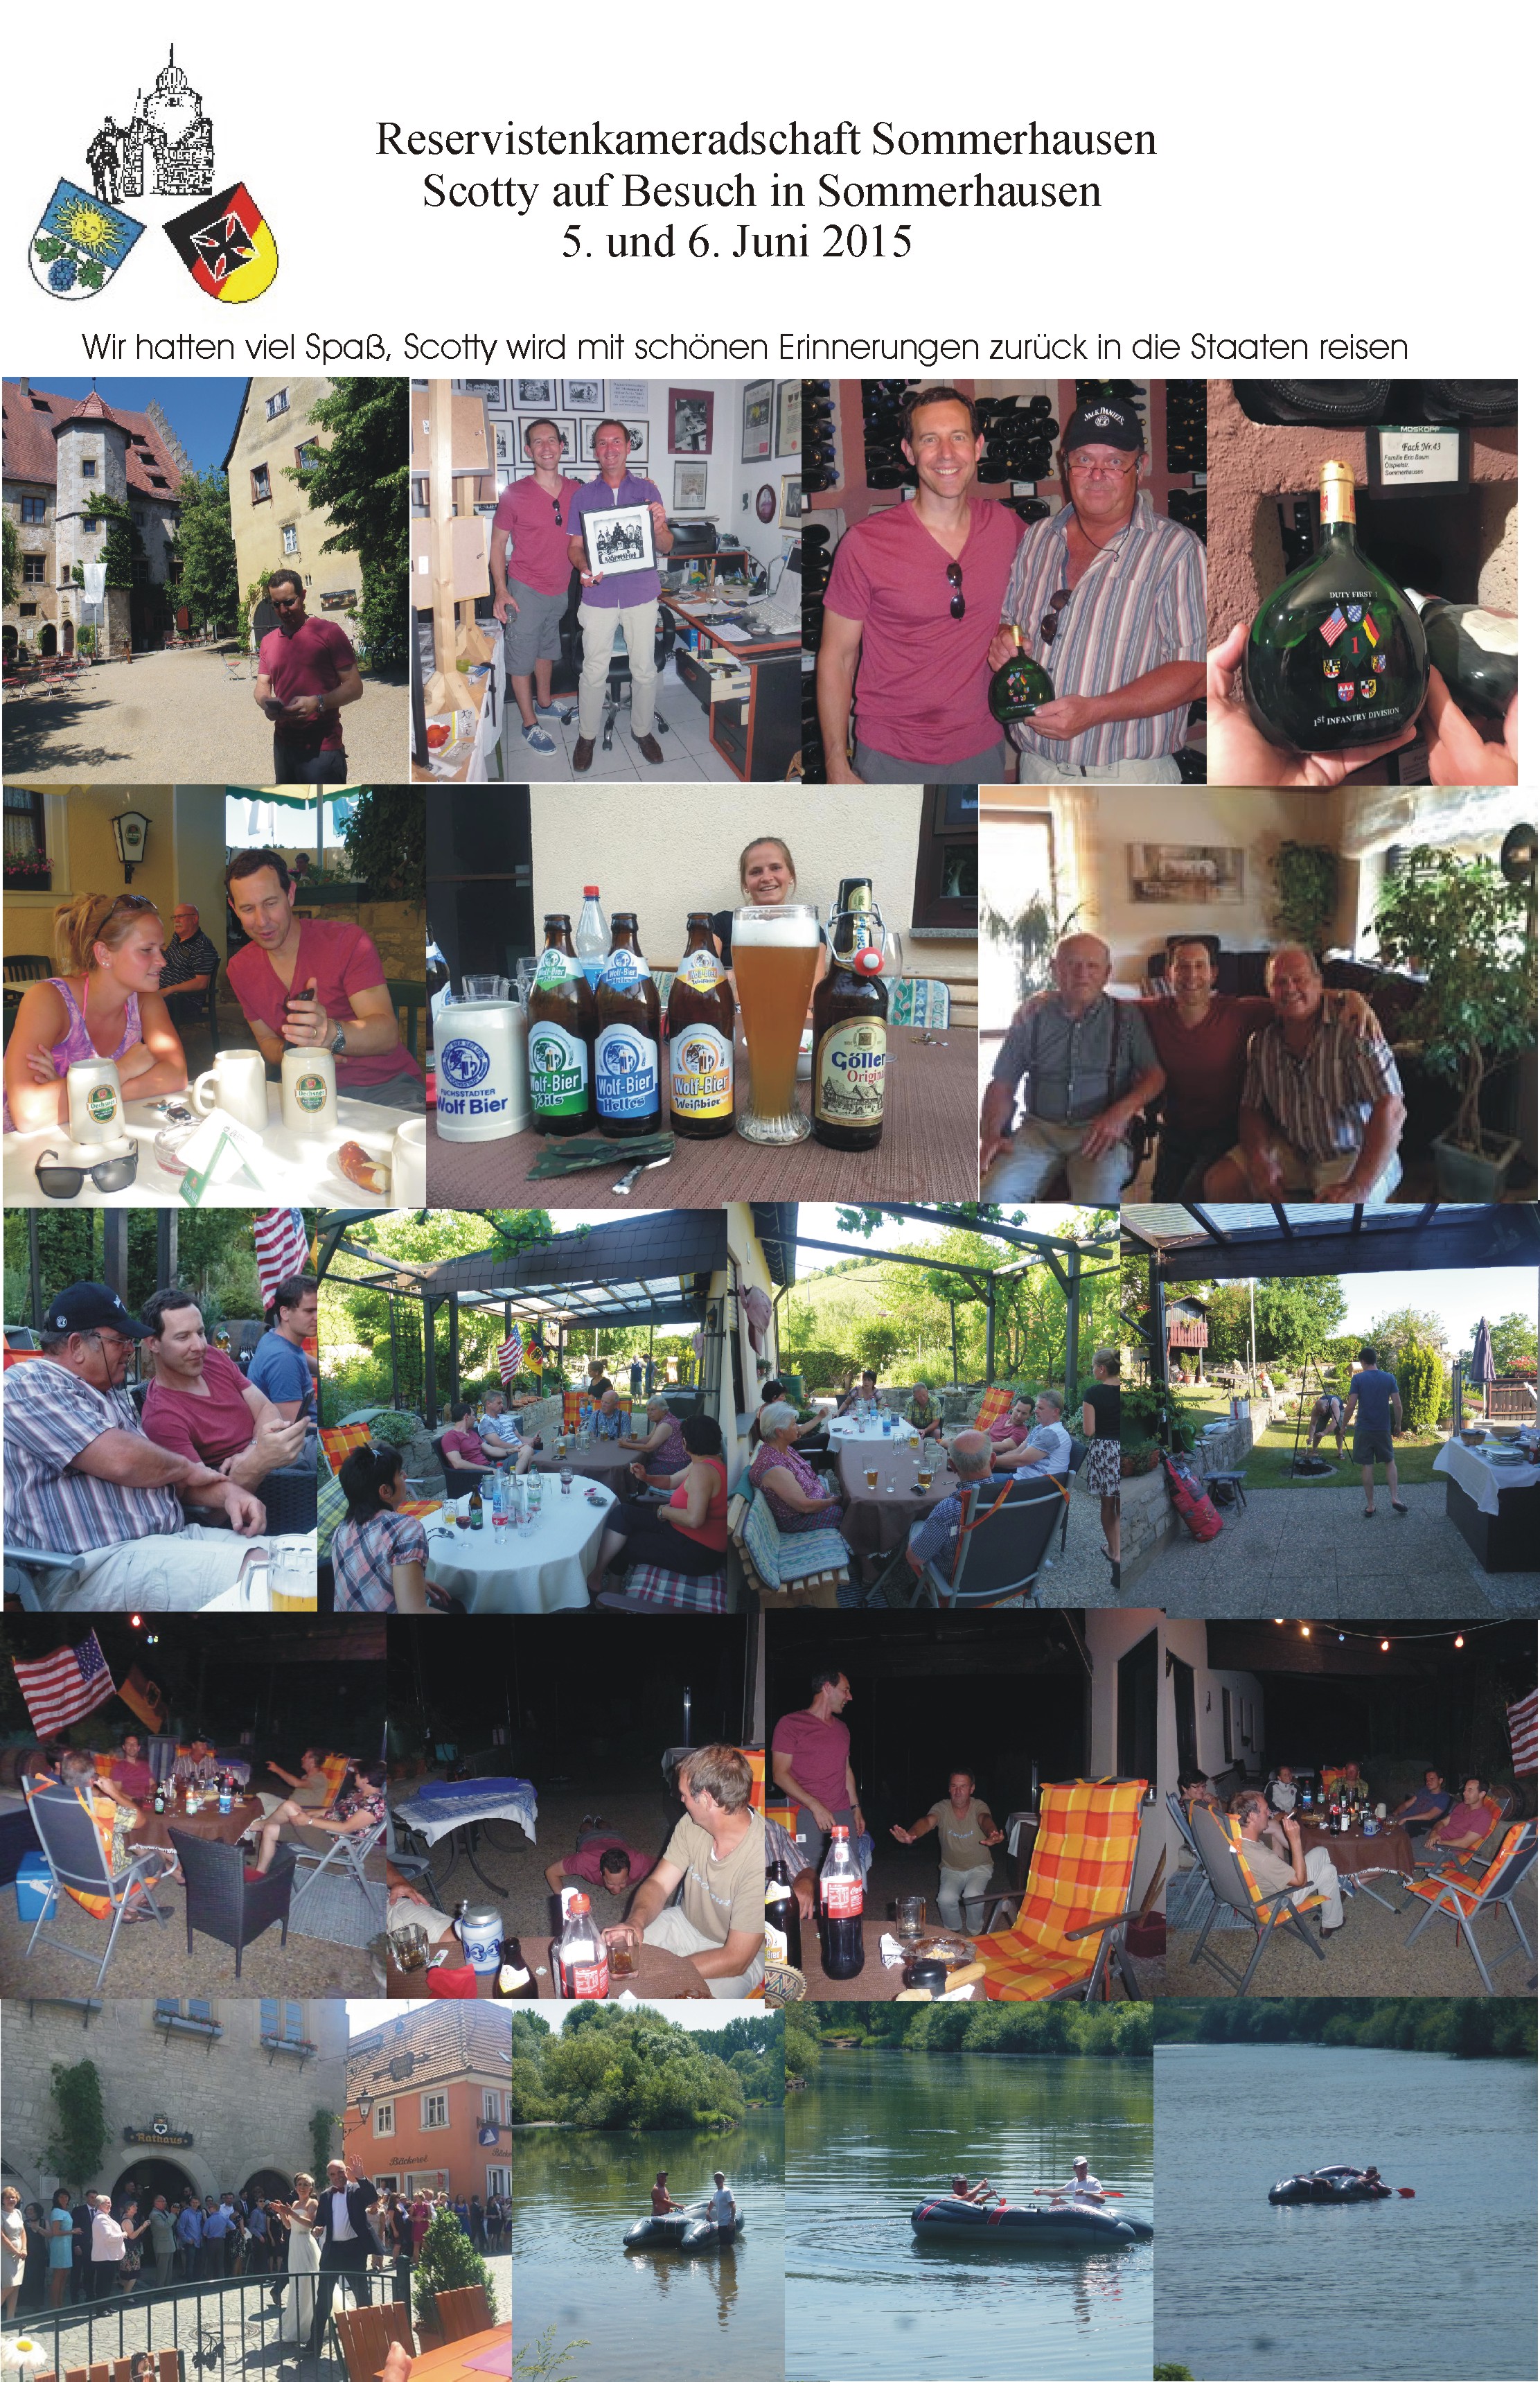 tl_files/RVK Sommerhausen/2015/Scotty in Sommerhausen 5 u 6 Juni 2015.JPG